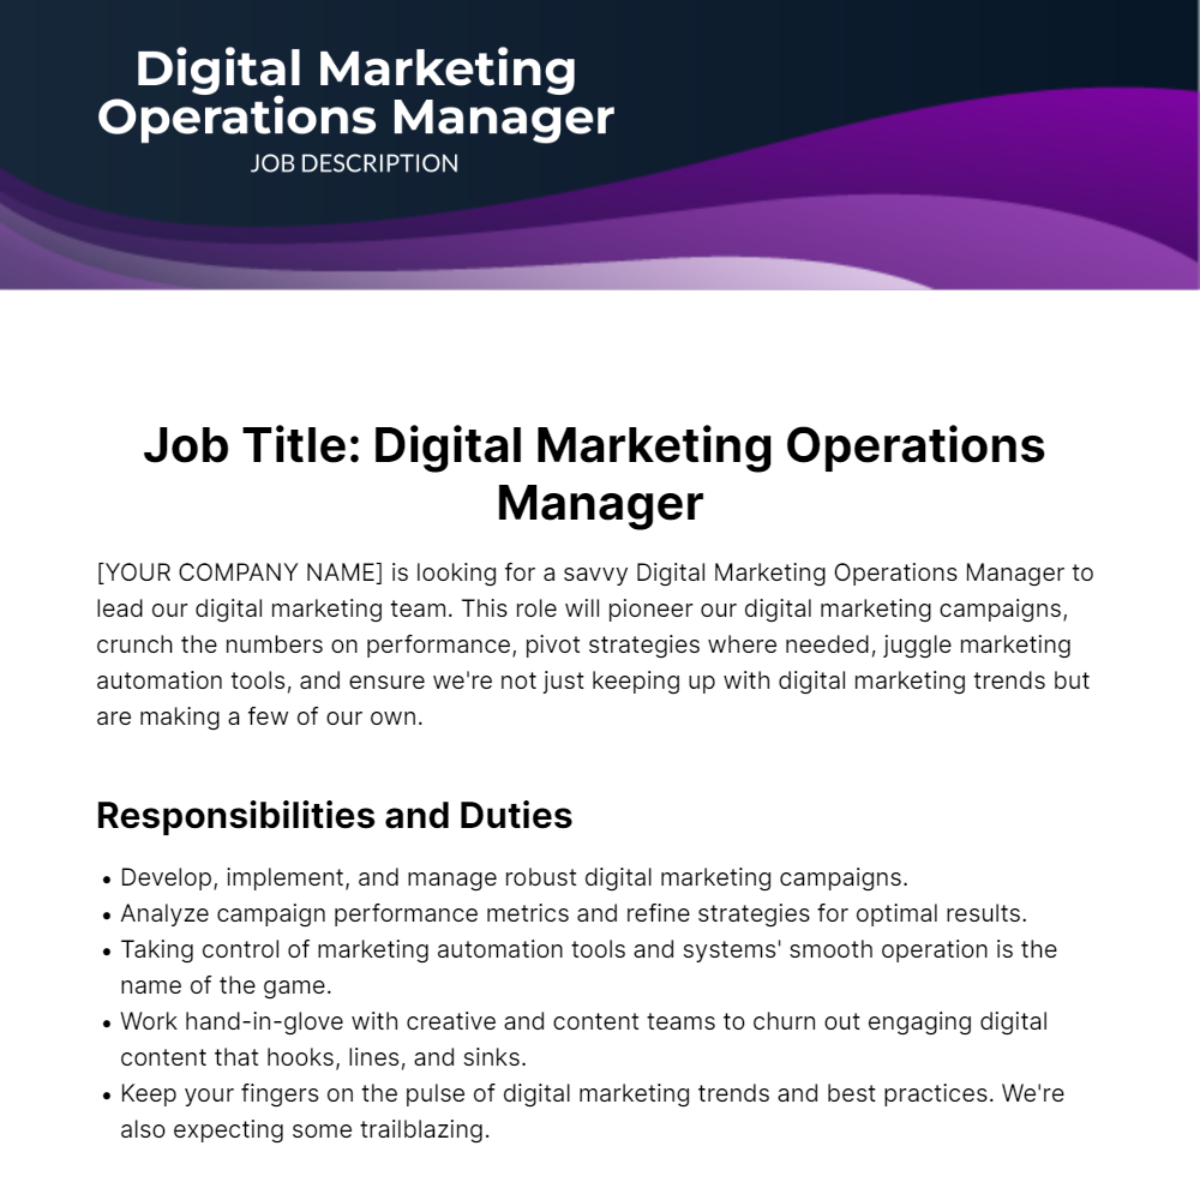 Digital Marketing Operations Manager Job Description Template